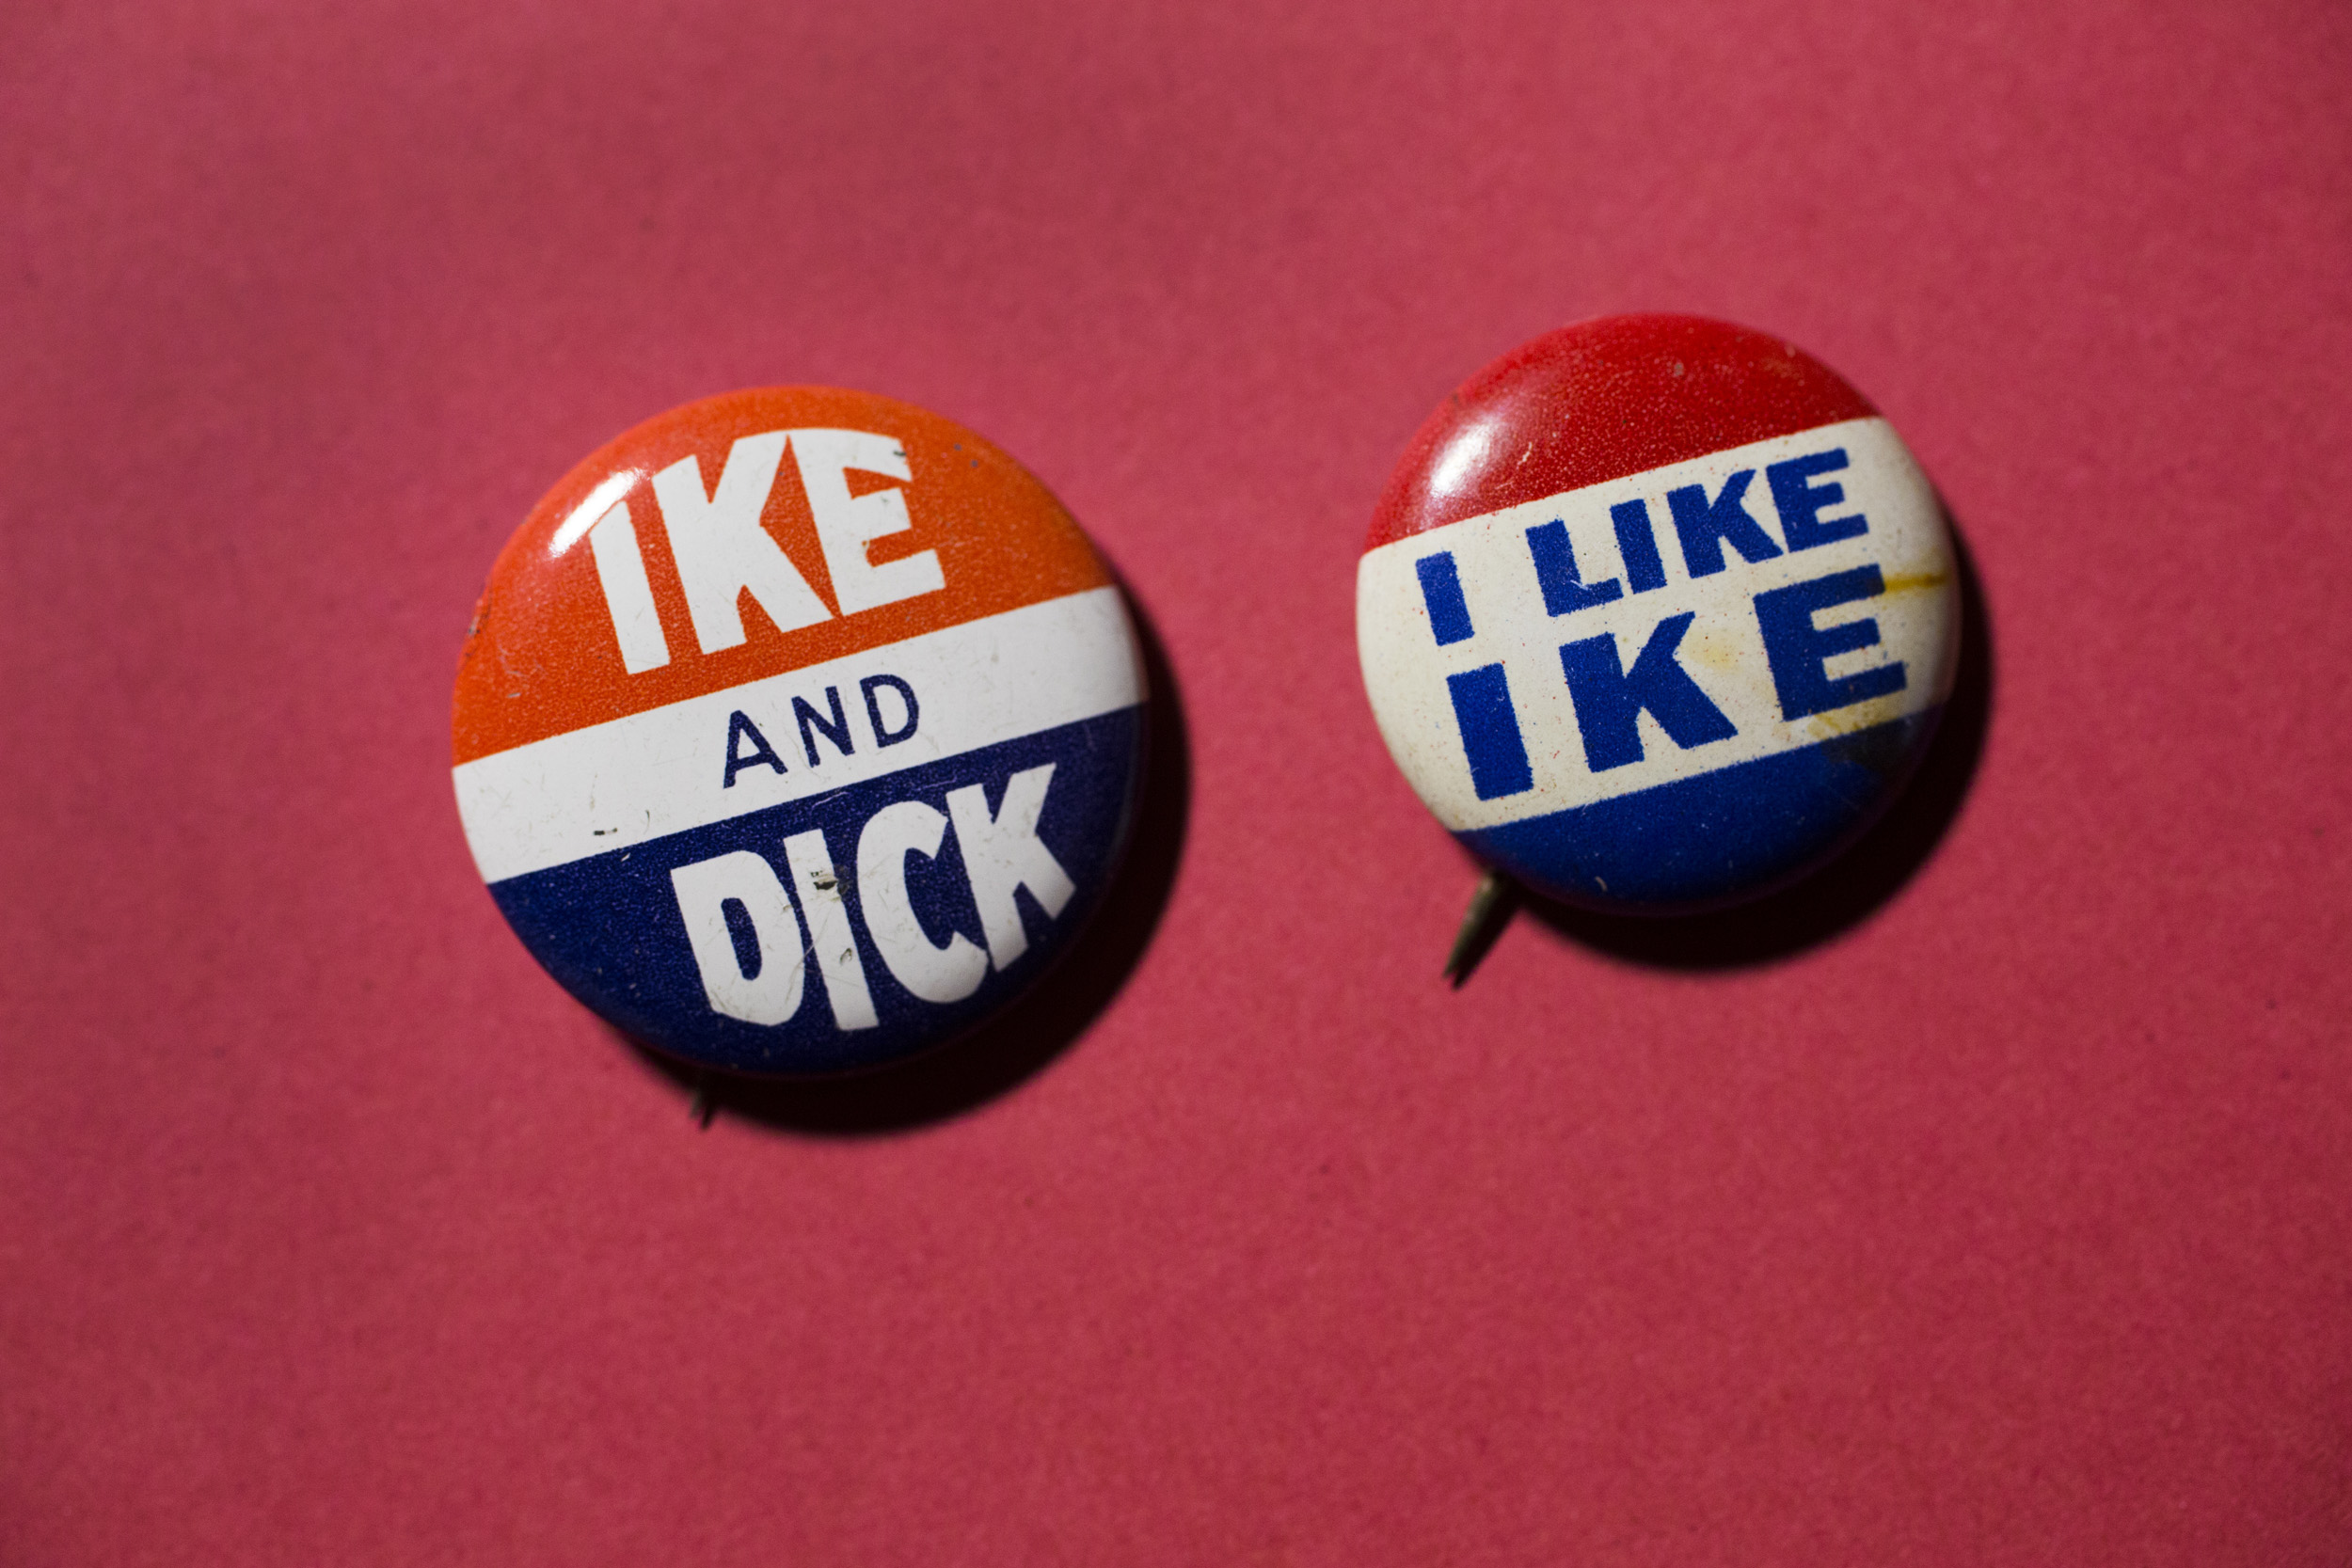 The famous “I like Ike” slogan spoke to Dwight D. Eisenhower’s popularity and trustworthiness.